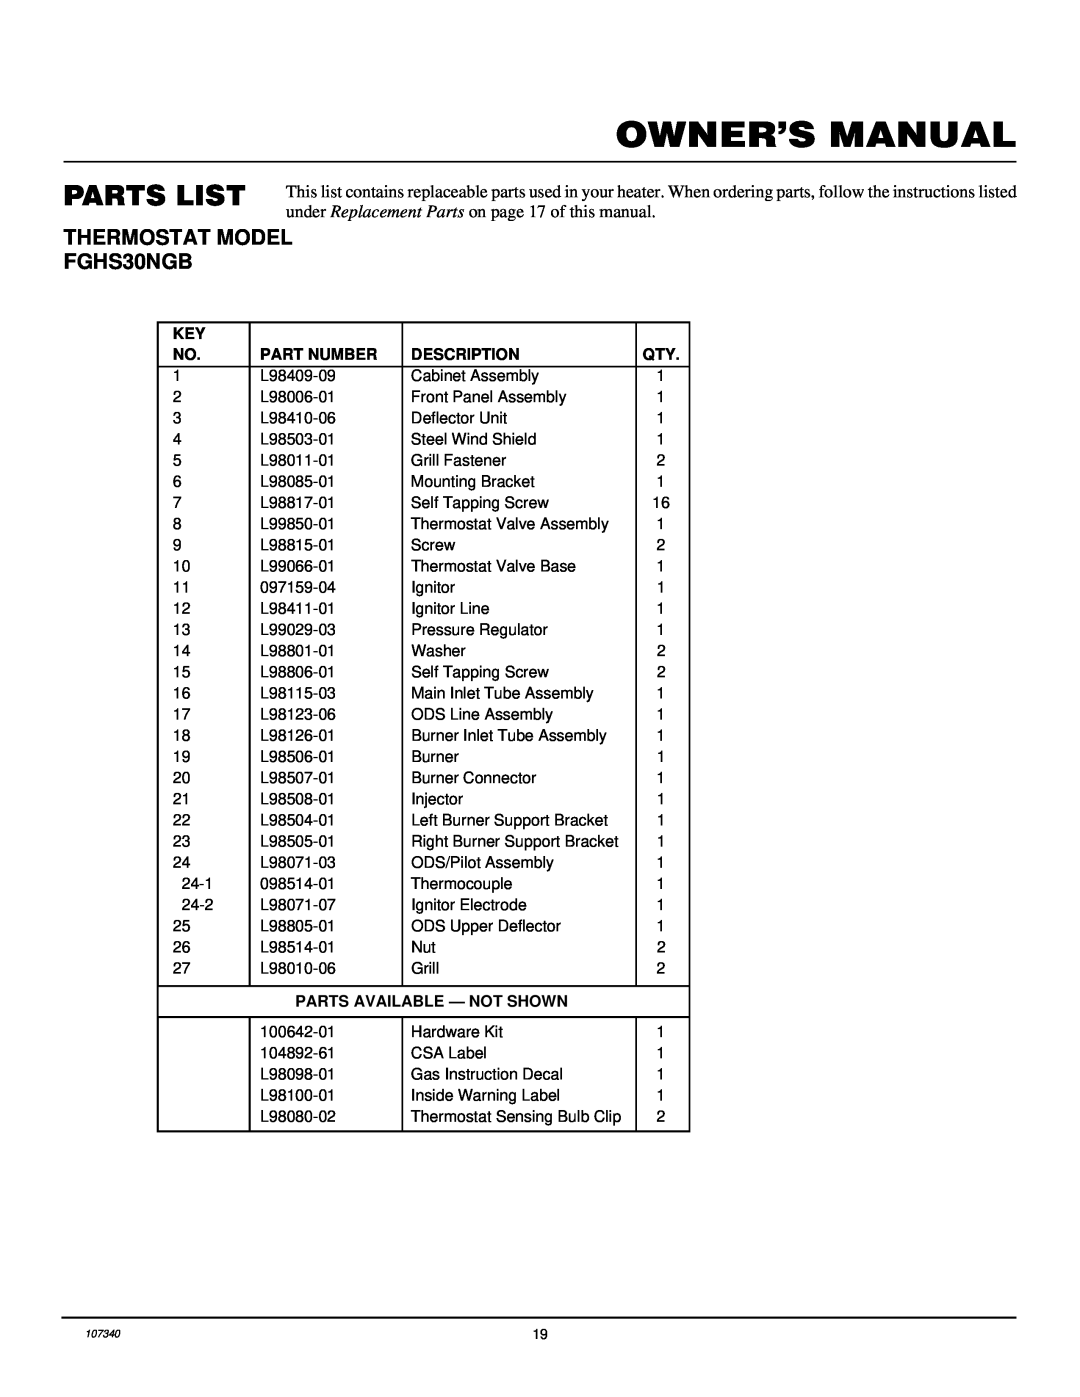 Desa installation manual Parts List, THERMOSTAT MODEL FGHS30NGB 